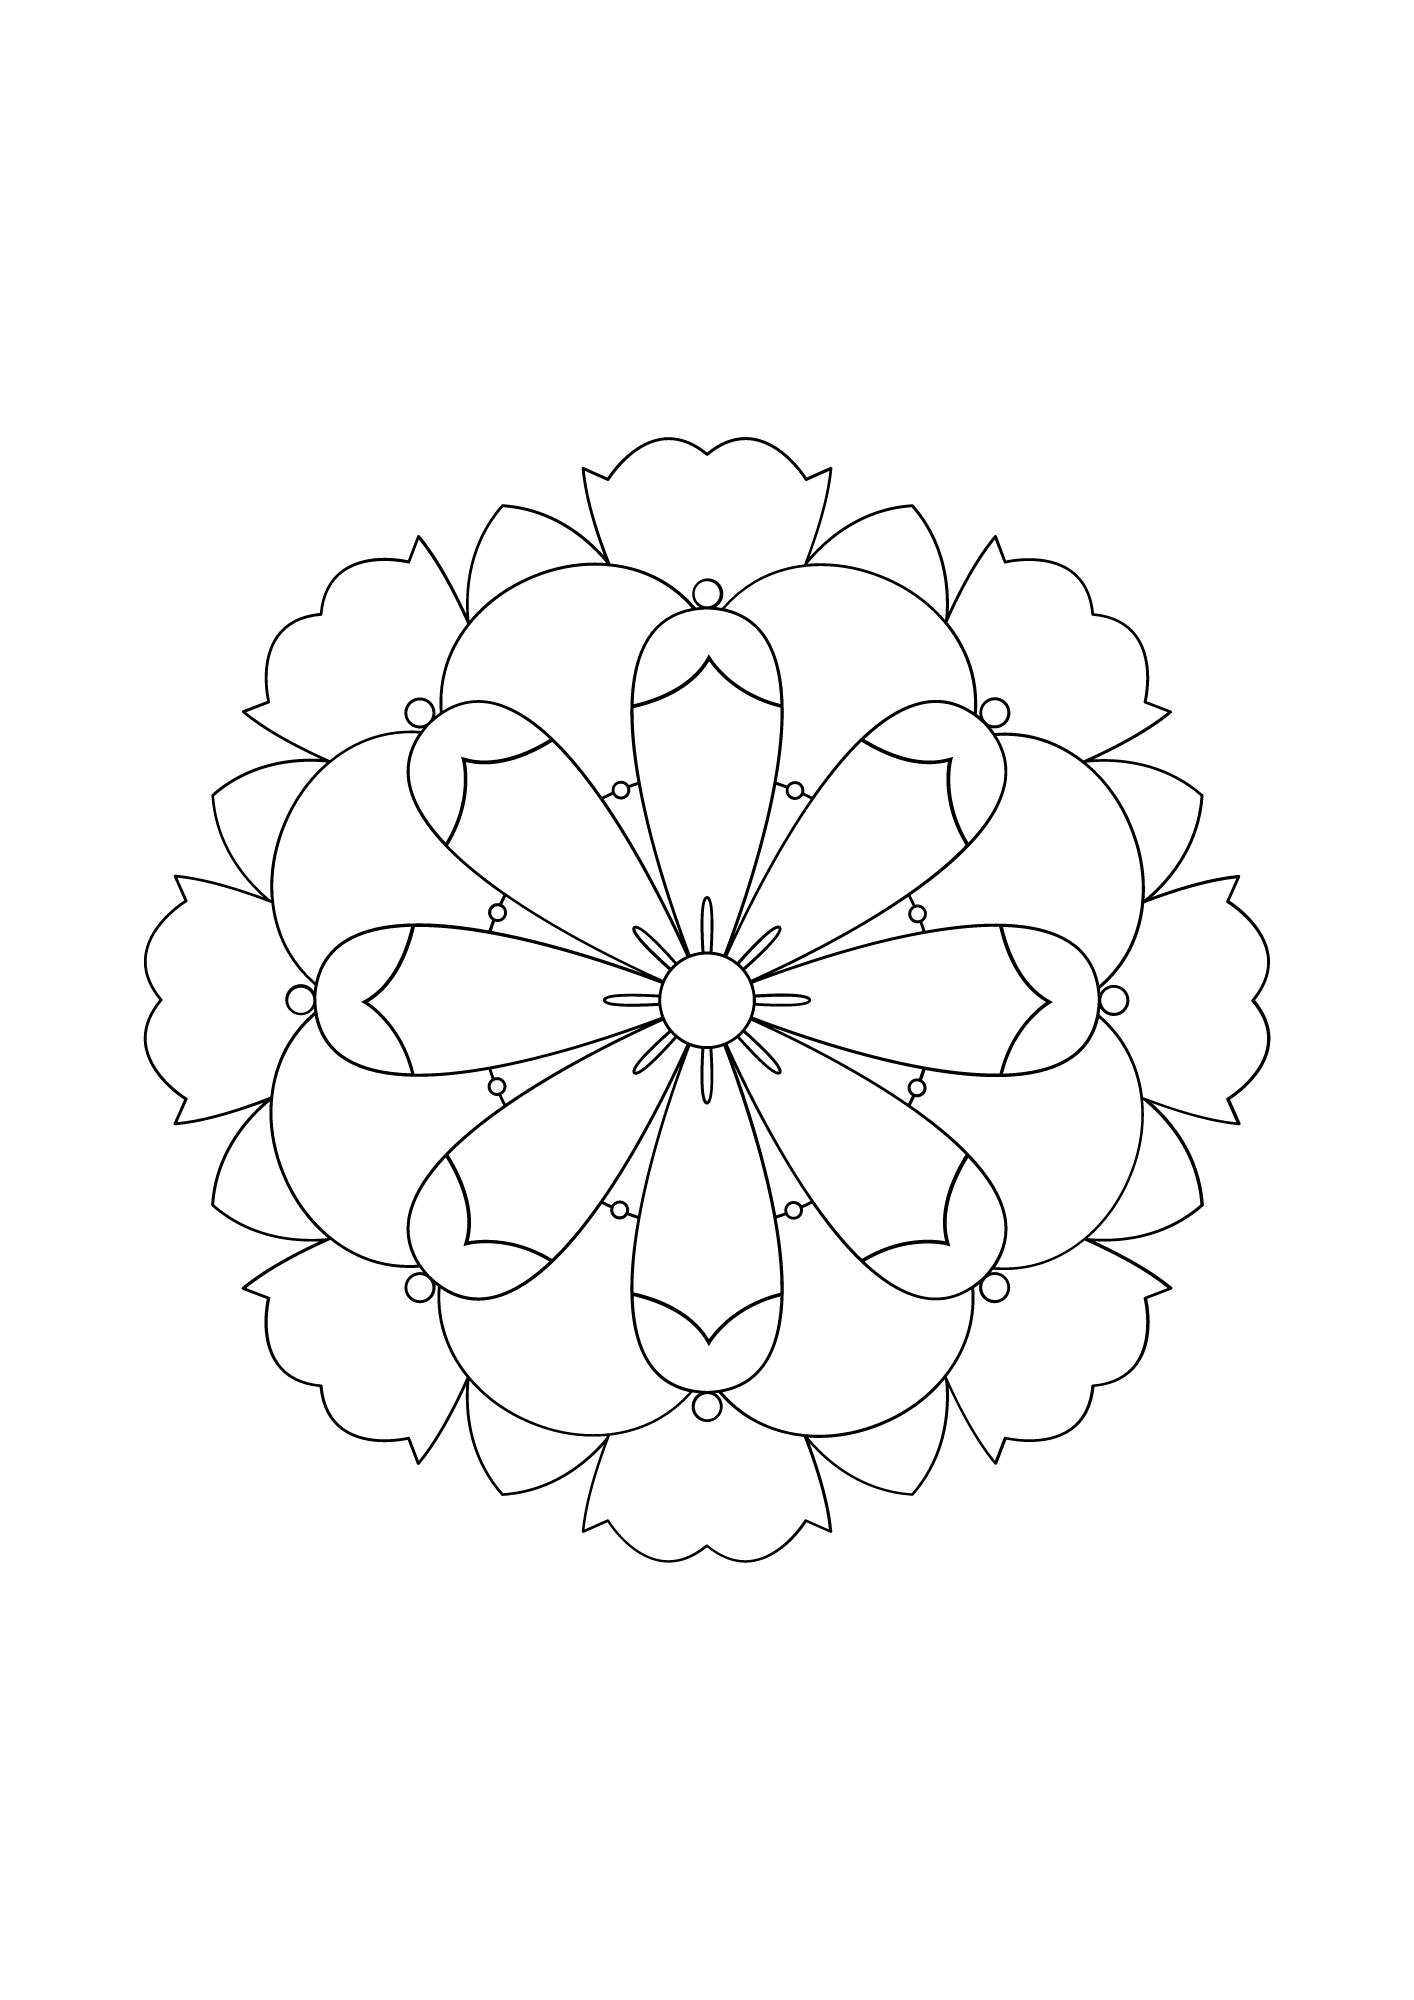 Simple Mandala Coloring Page